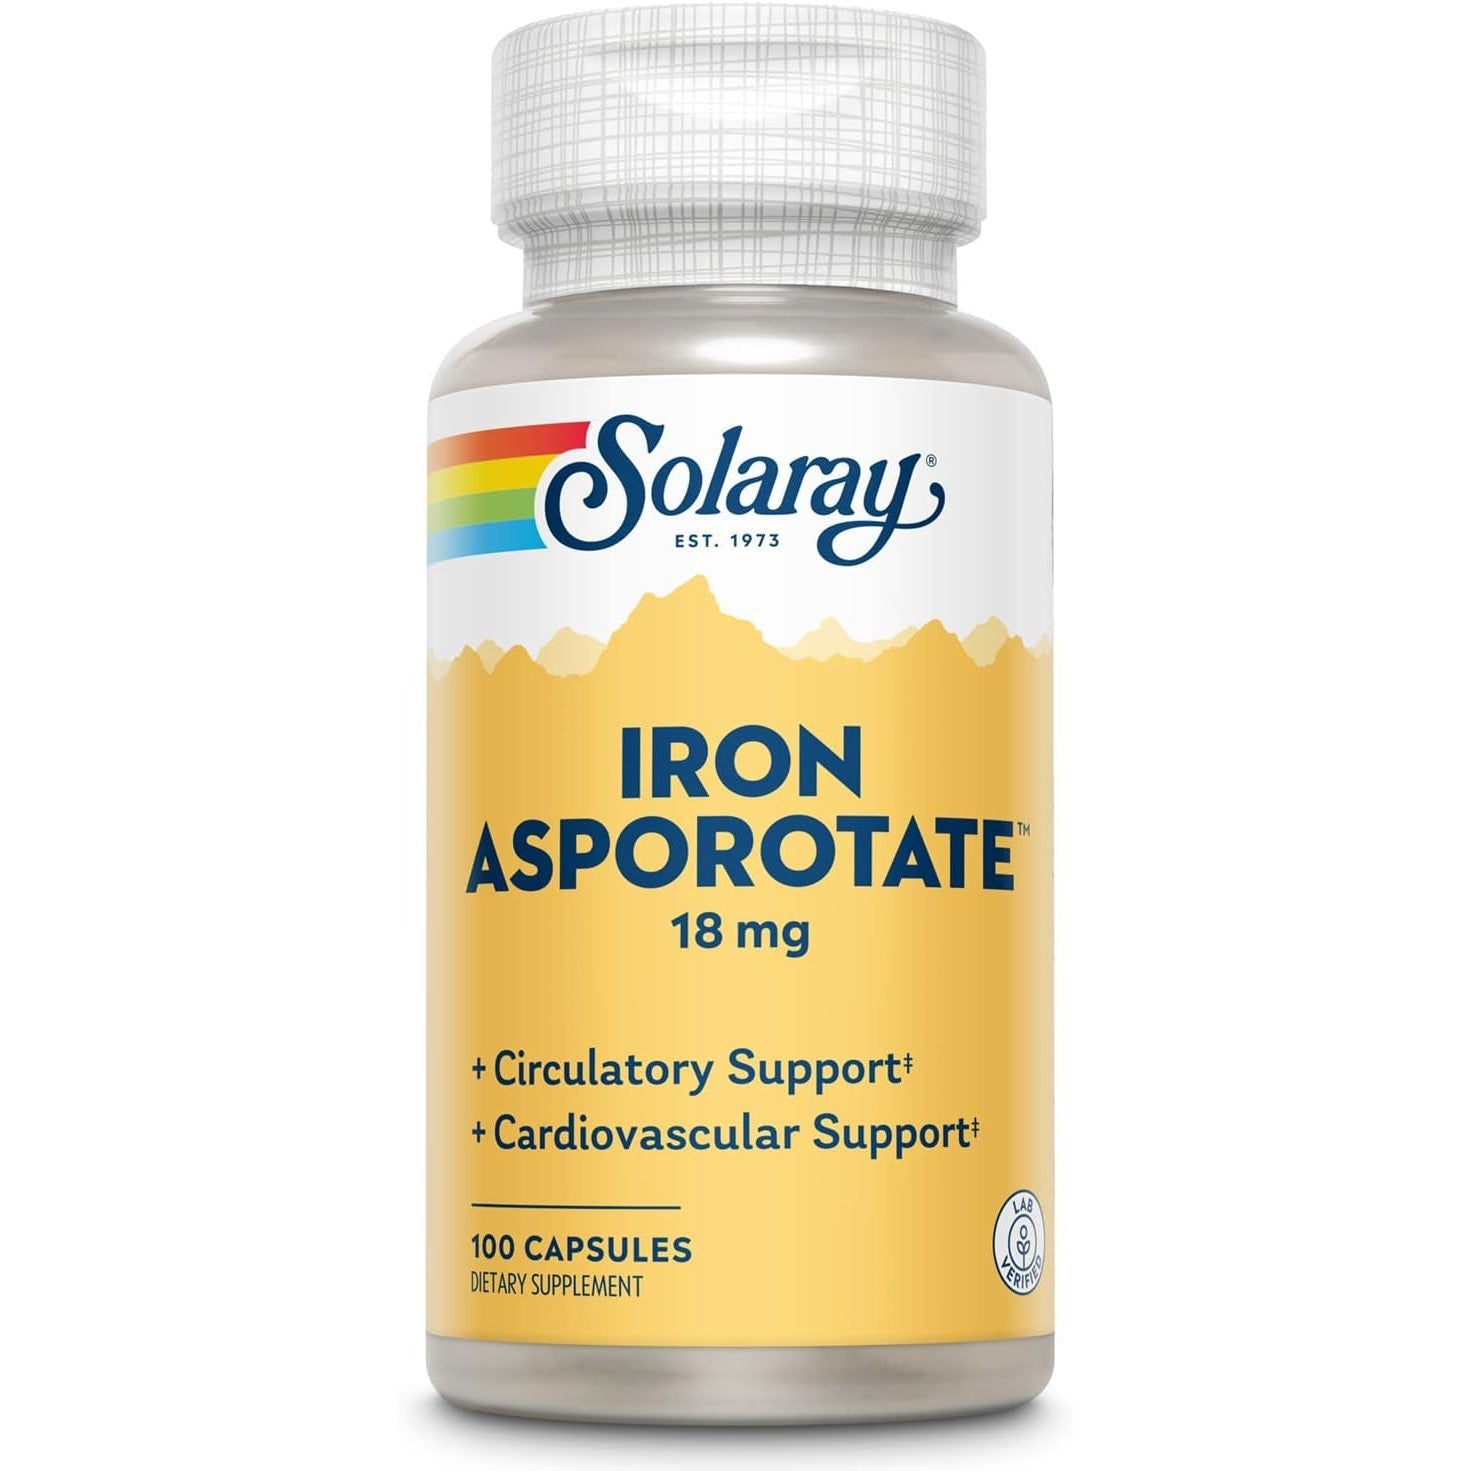 Solaray Iron Asporotate 18mg